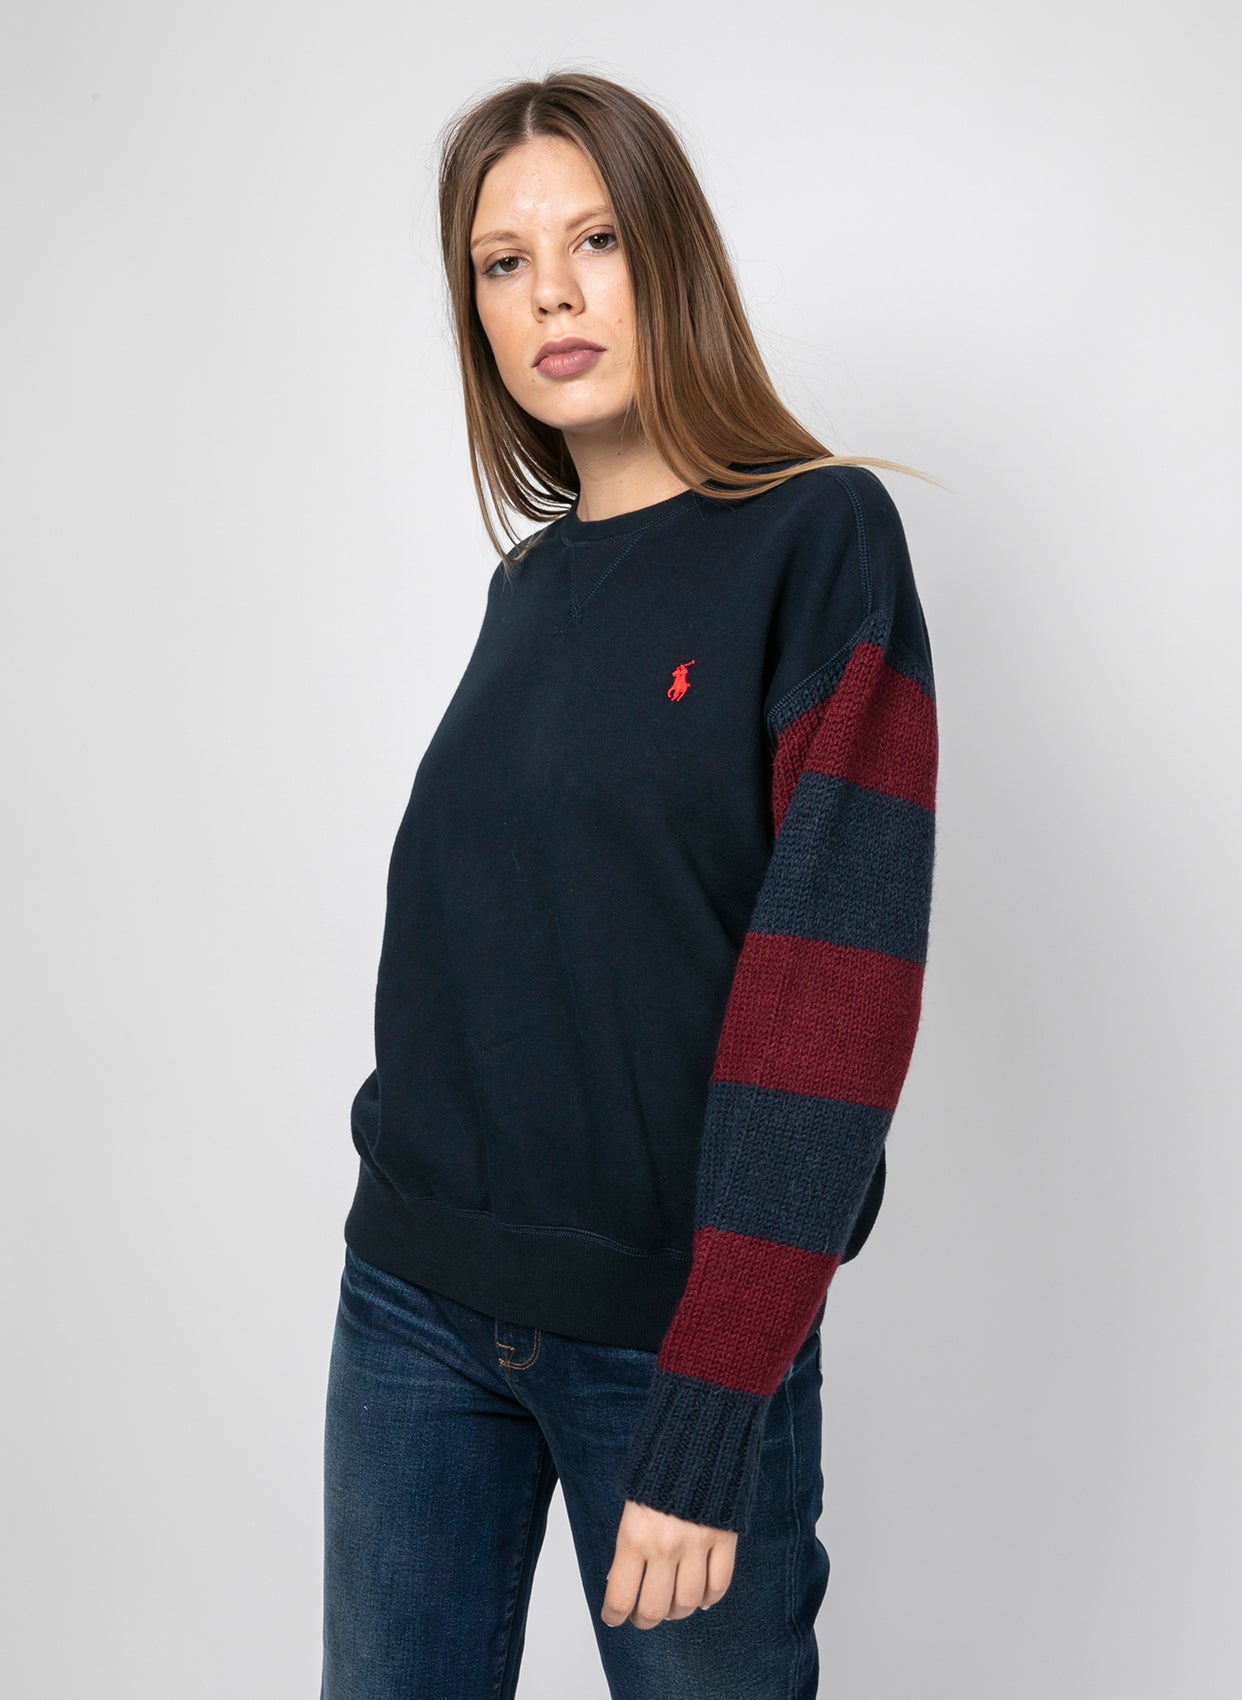 Polo Ralph Lauren Sweatshirt-Libas Trendy Fashion Store